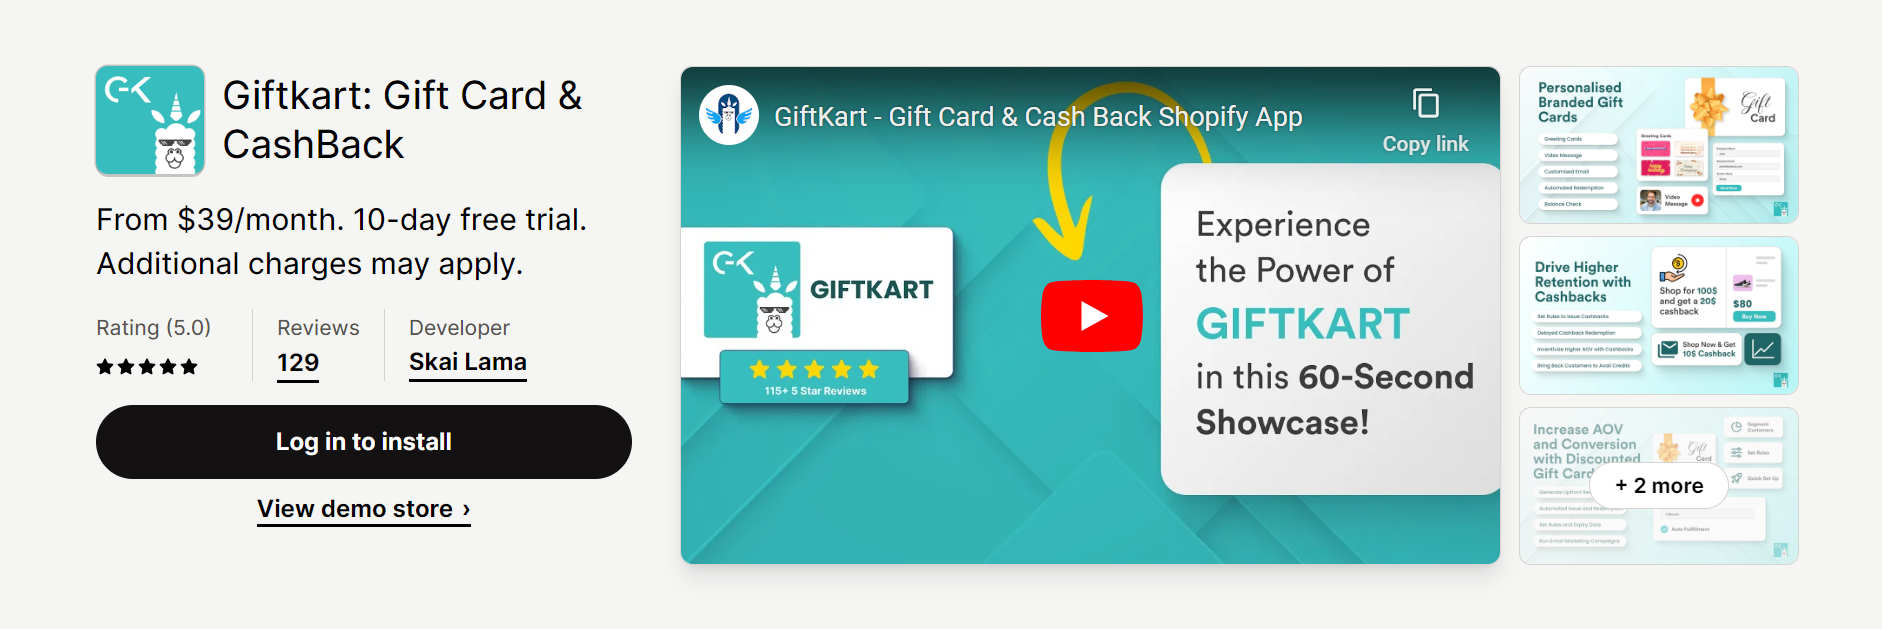 Giftkart: Gift Card & CashBack